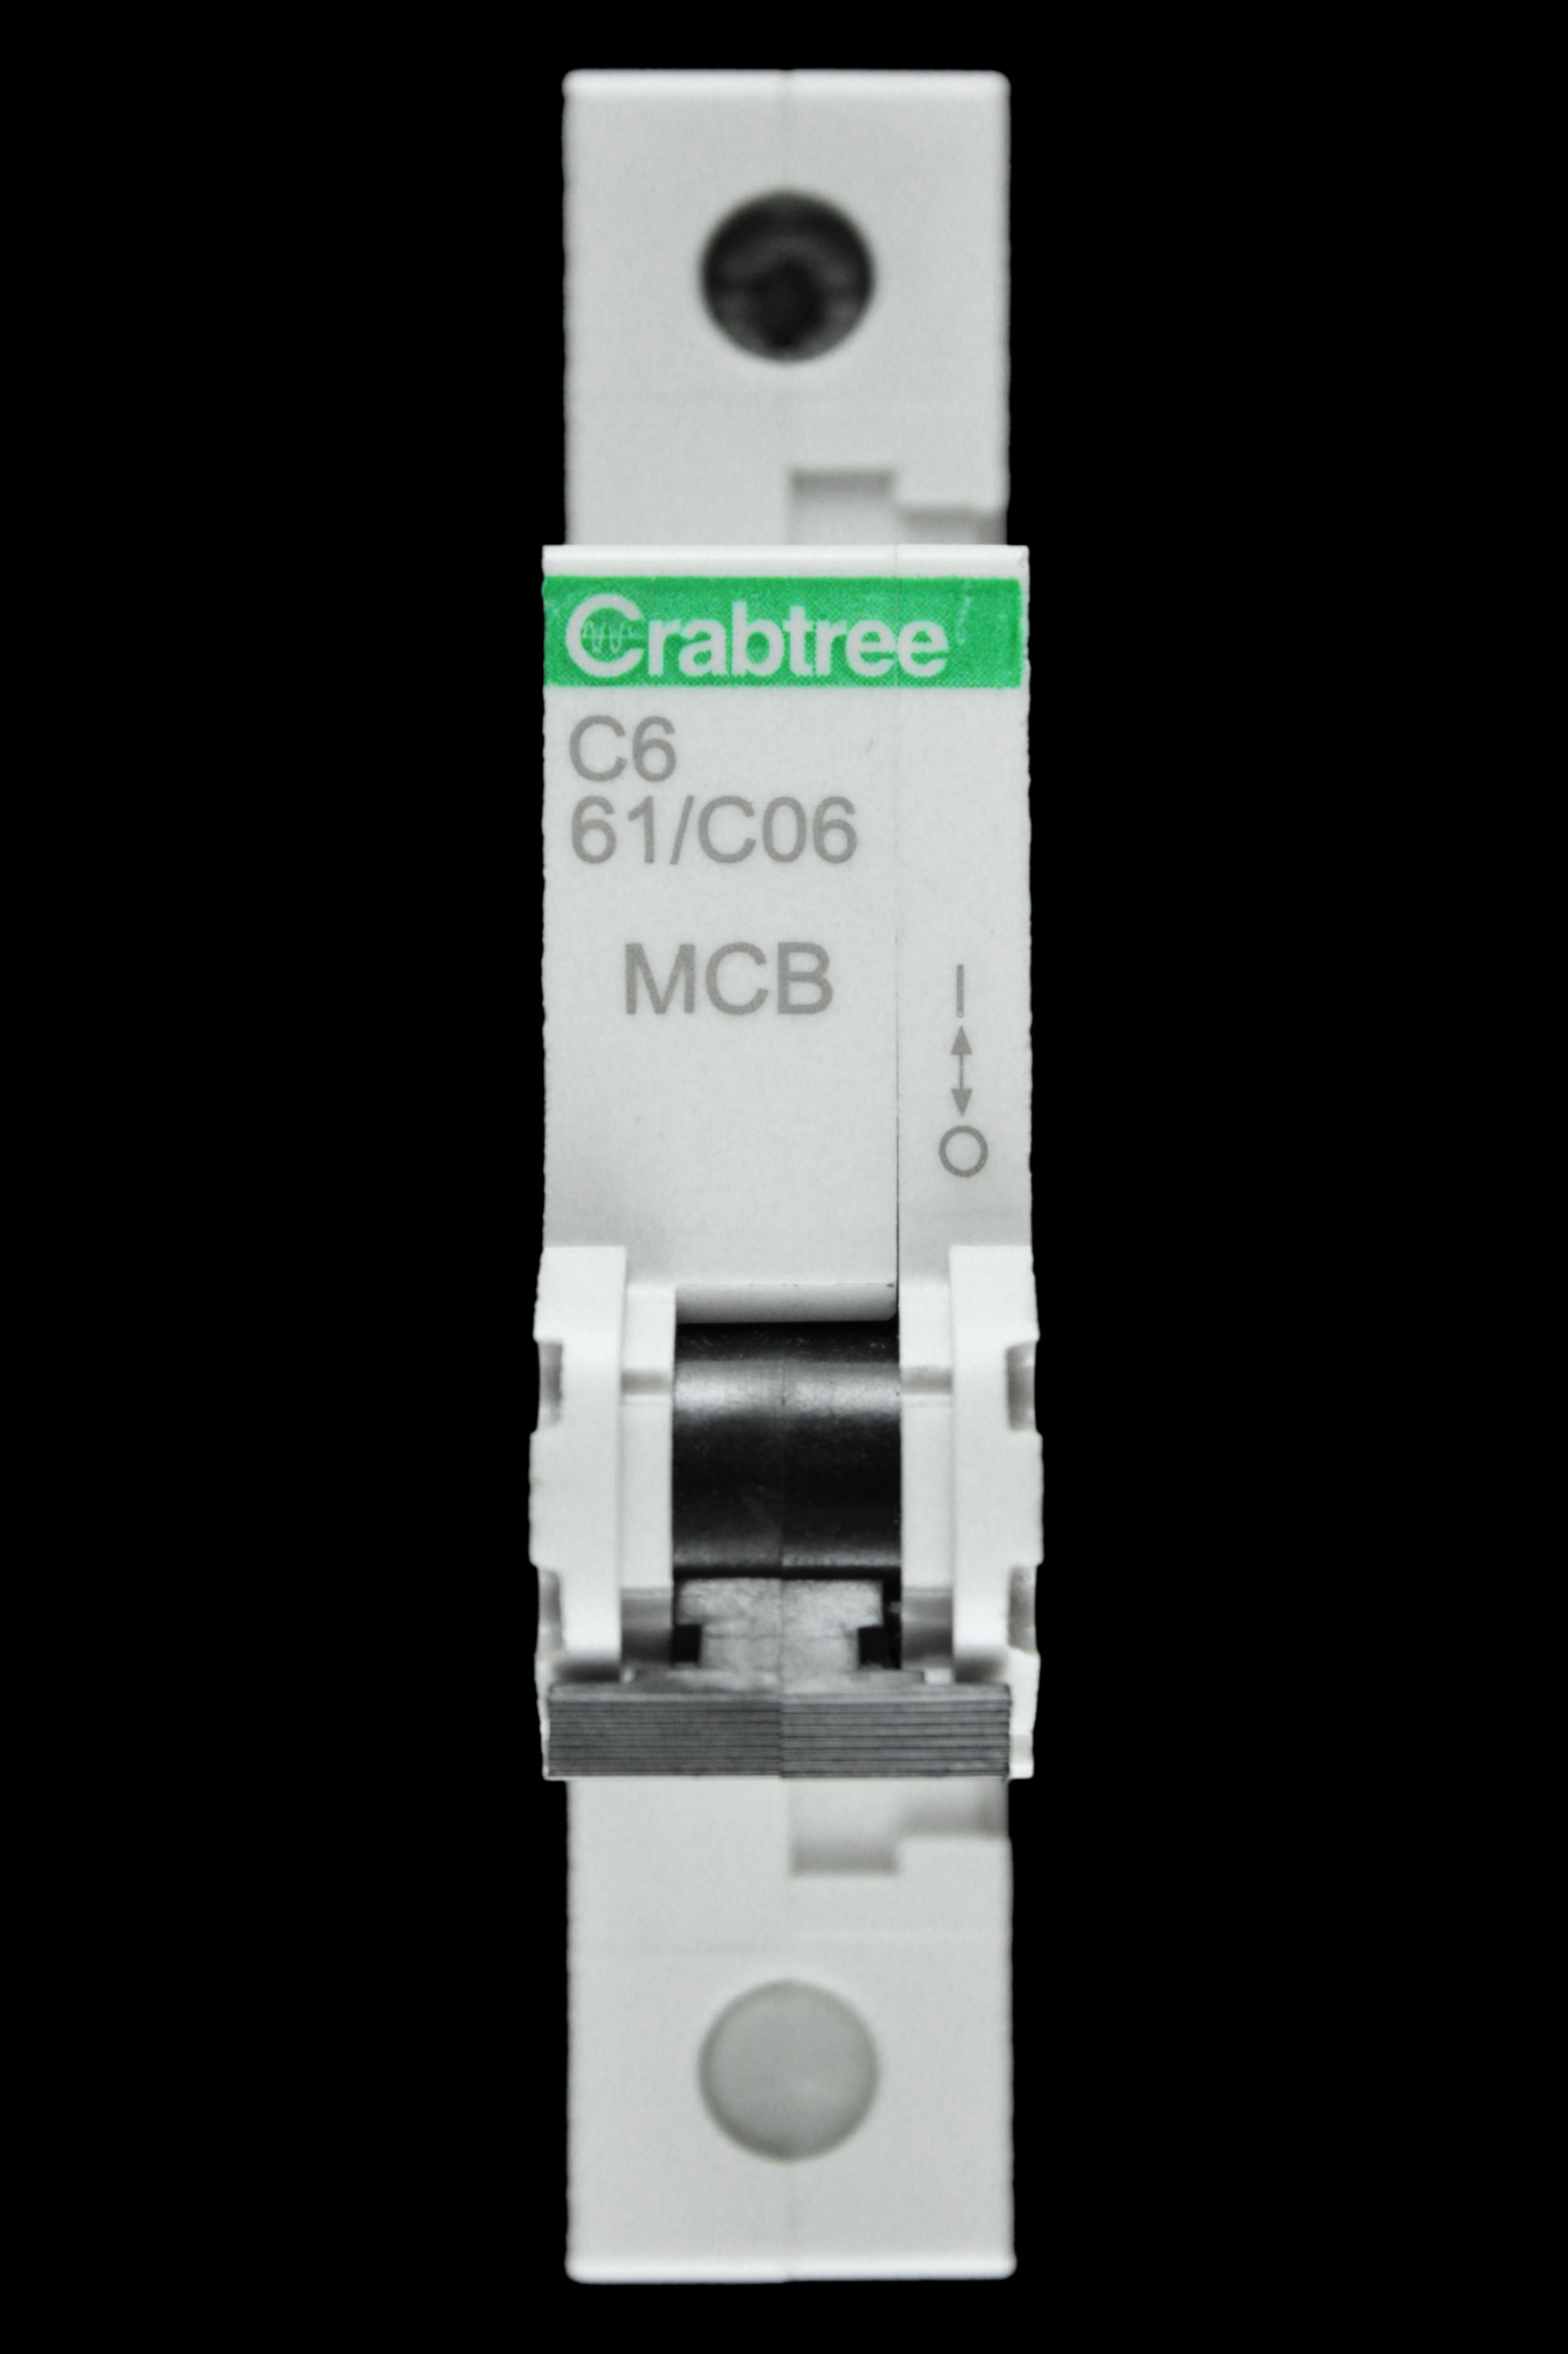 CRABTREE 6 AMP CURVE C 6kA MCB CIRCUIT BREAKER STARBREAKER 61/C06 NS